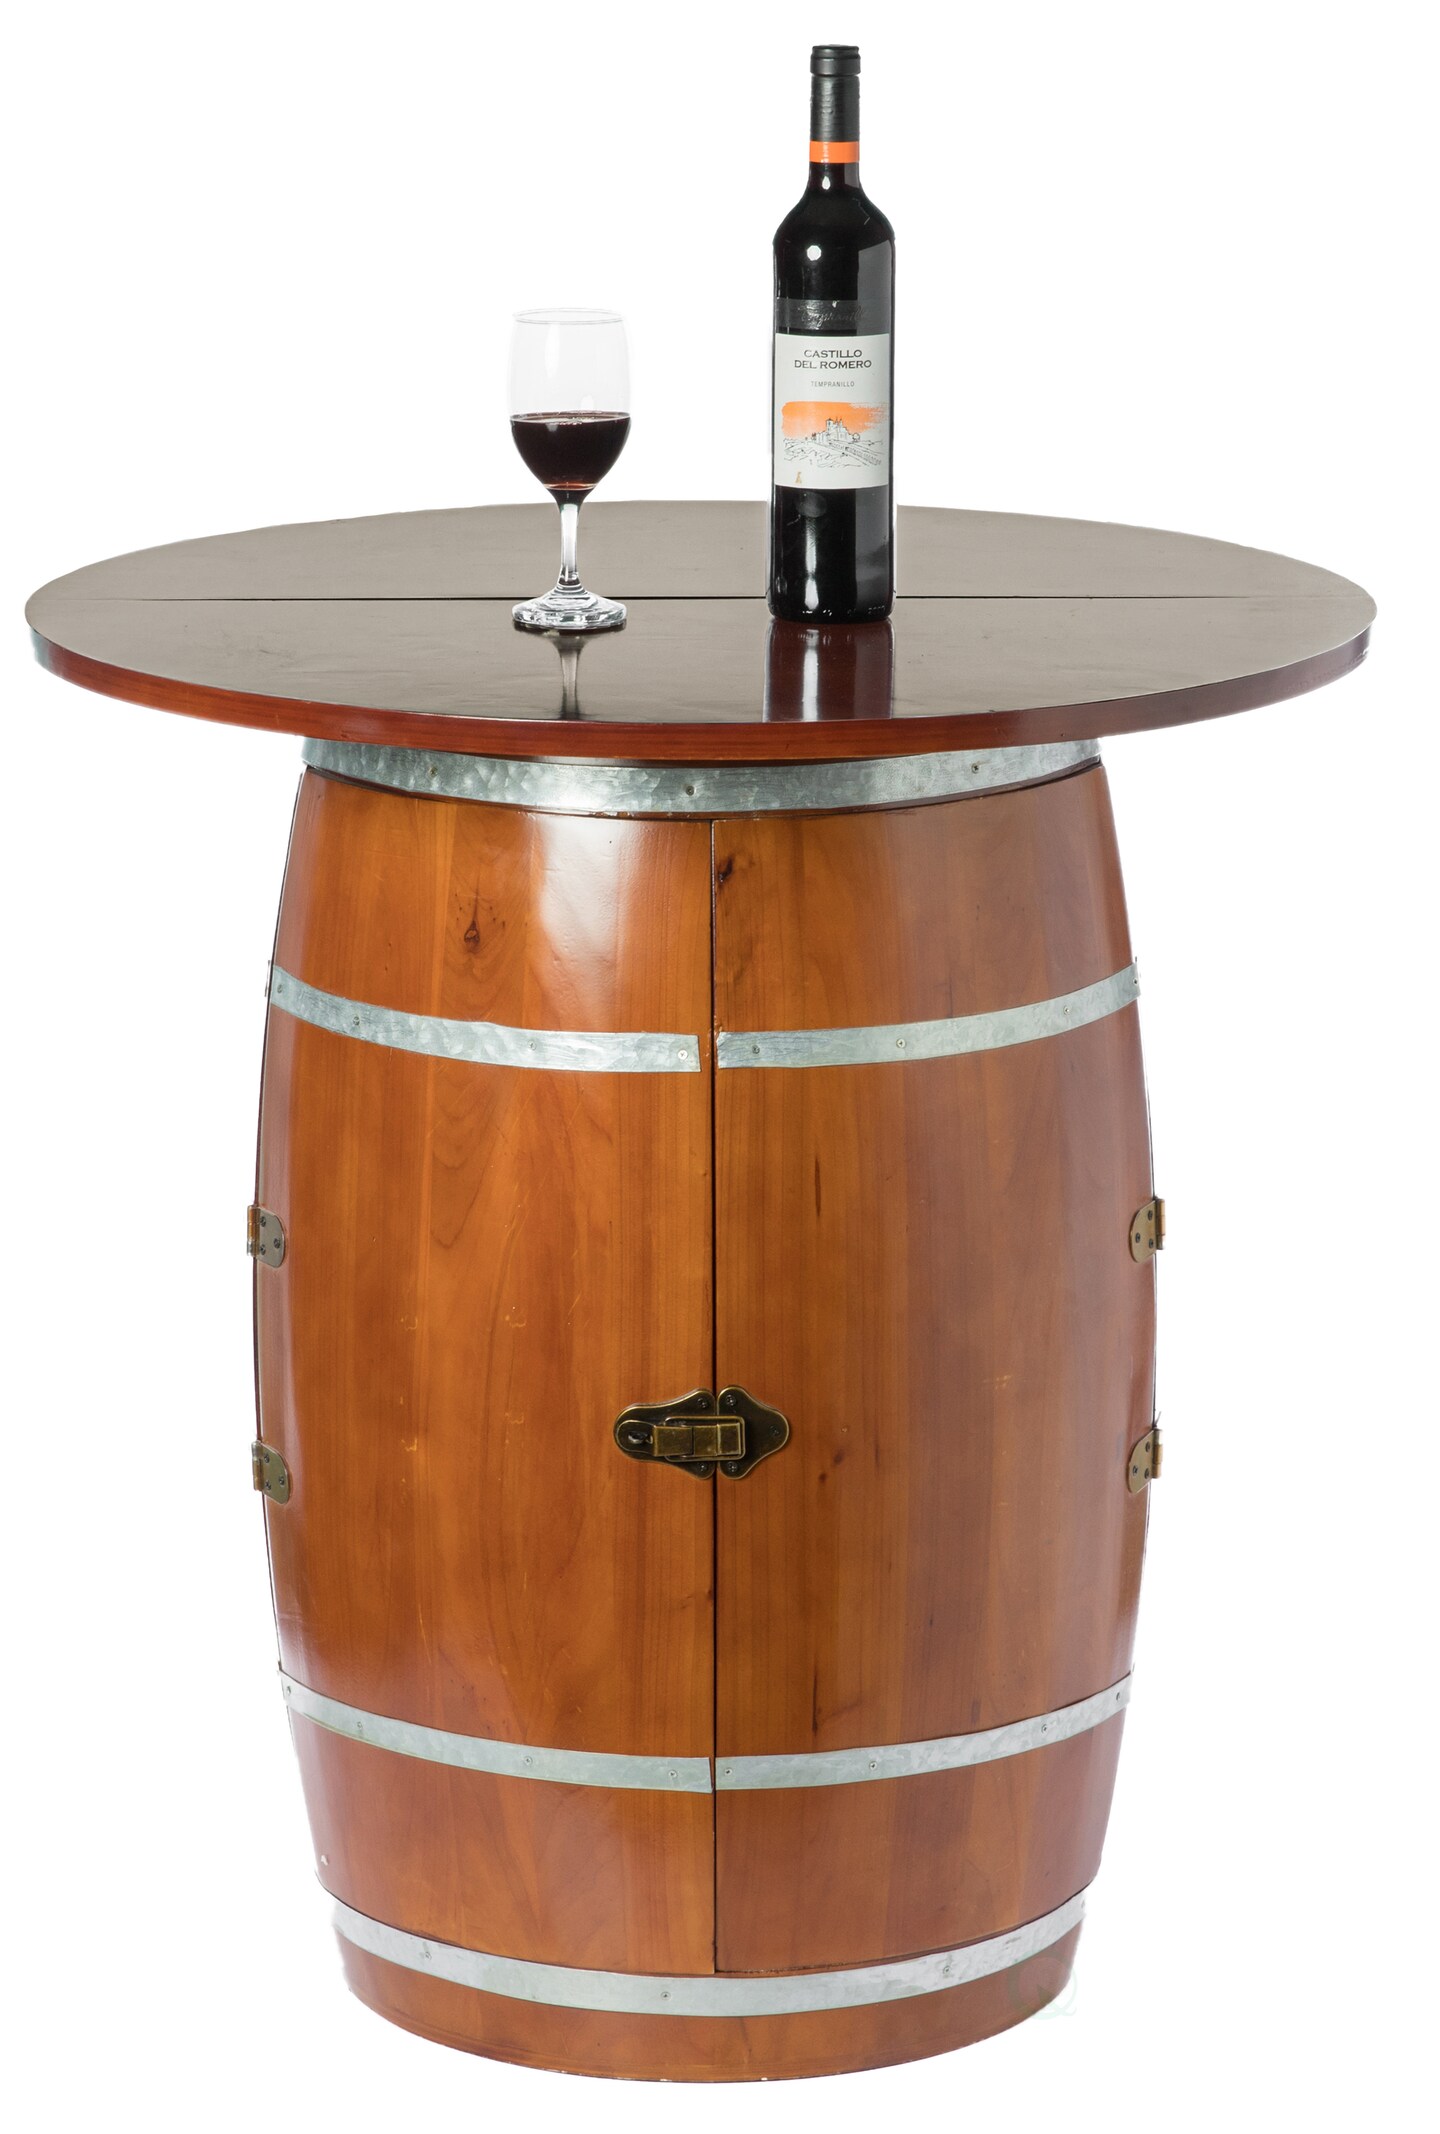 Wine Barrel Round Table Wine Storage Cabinet